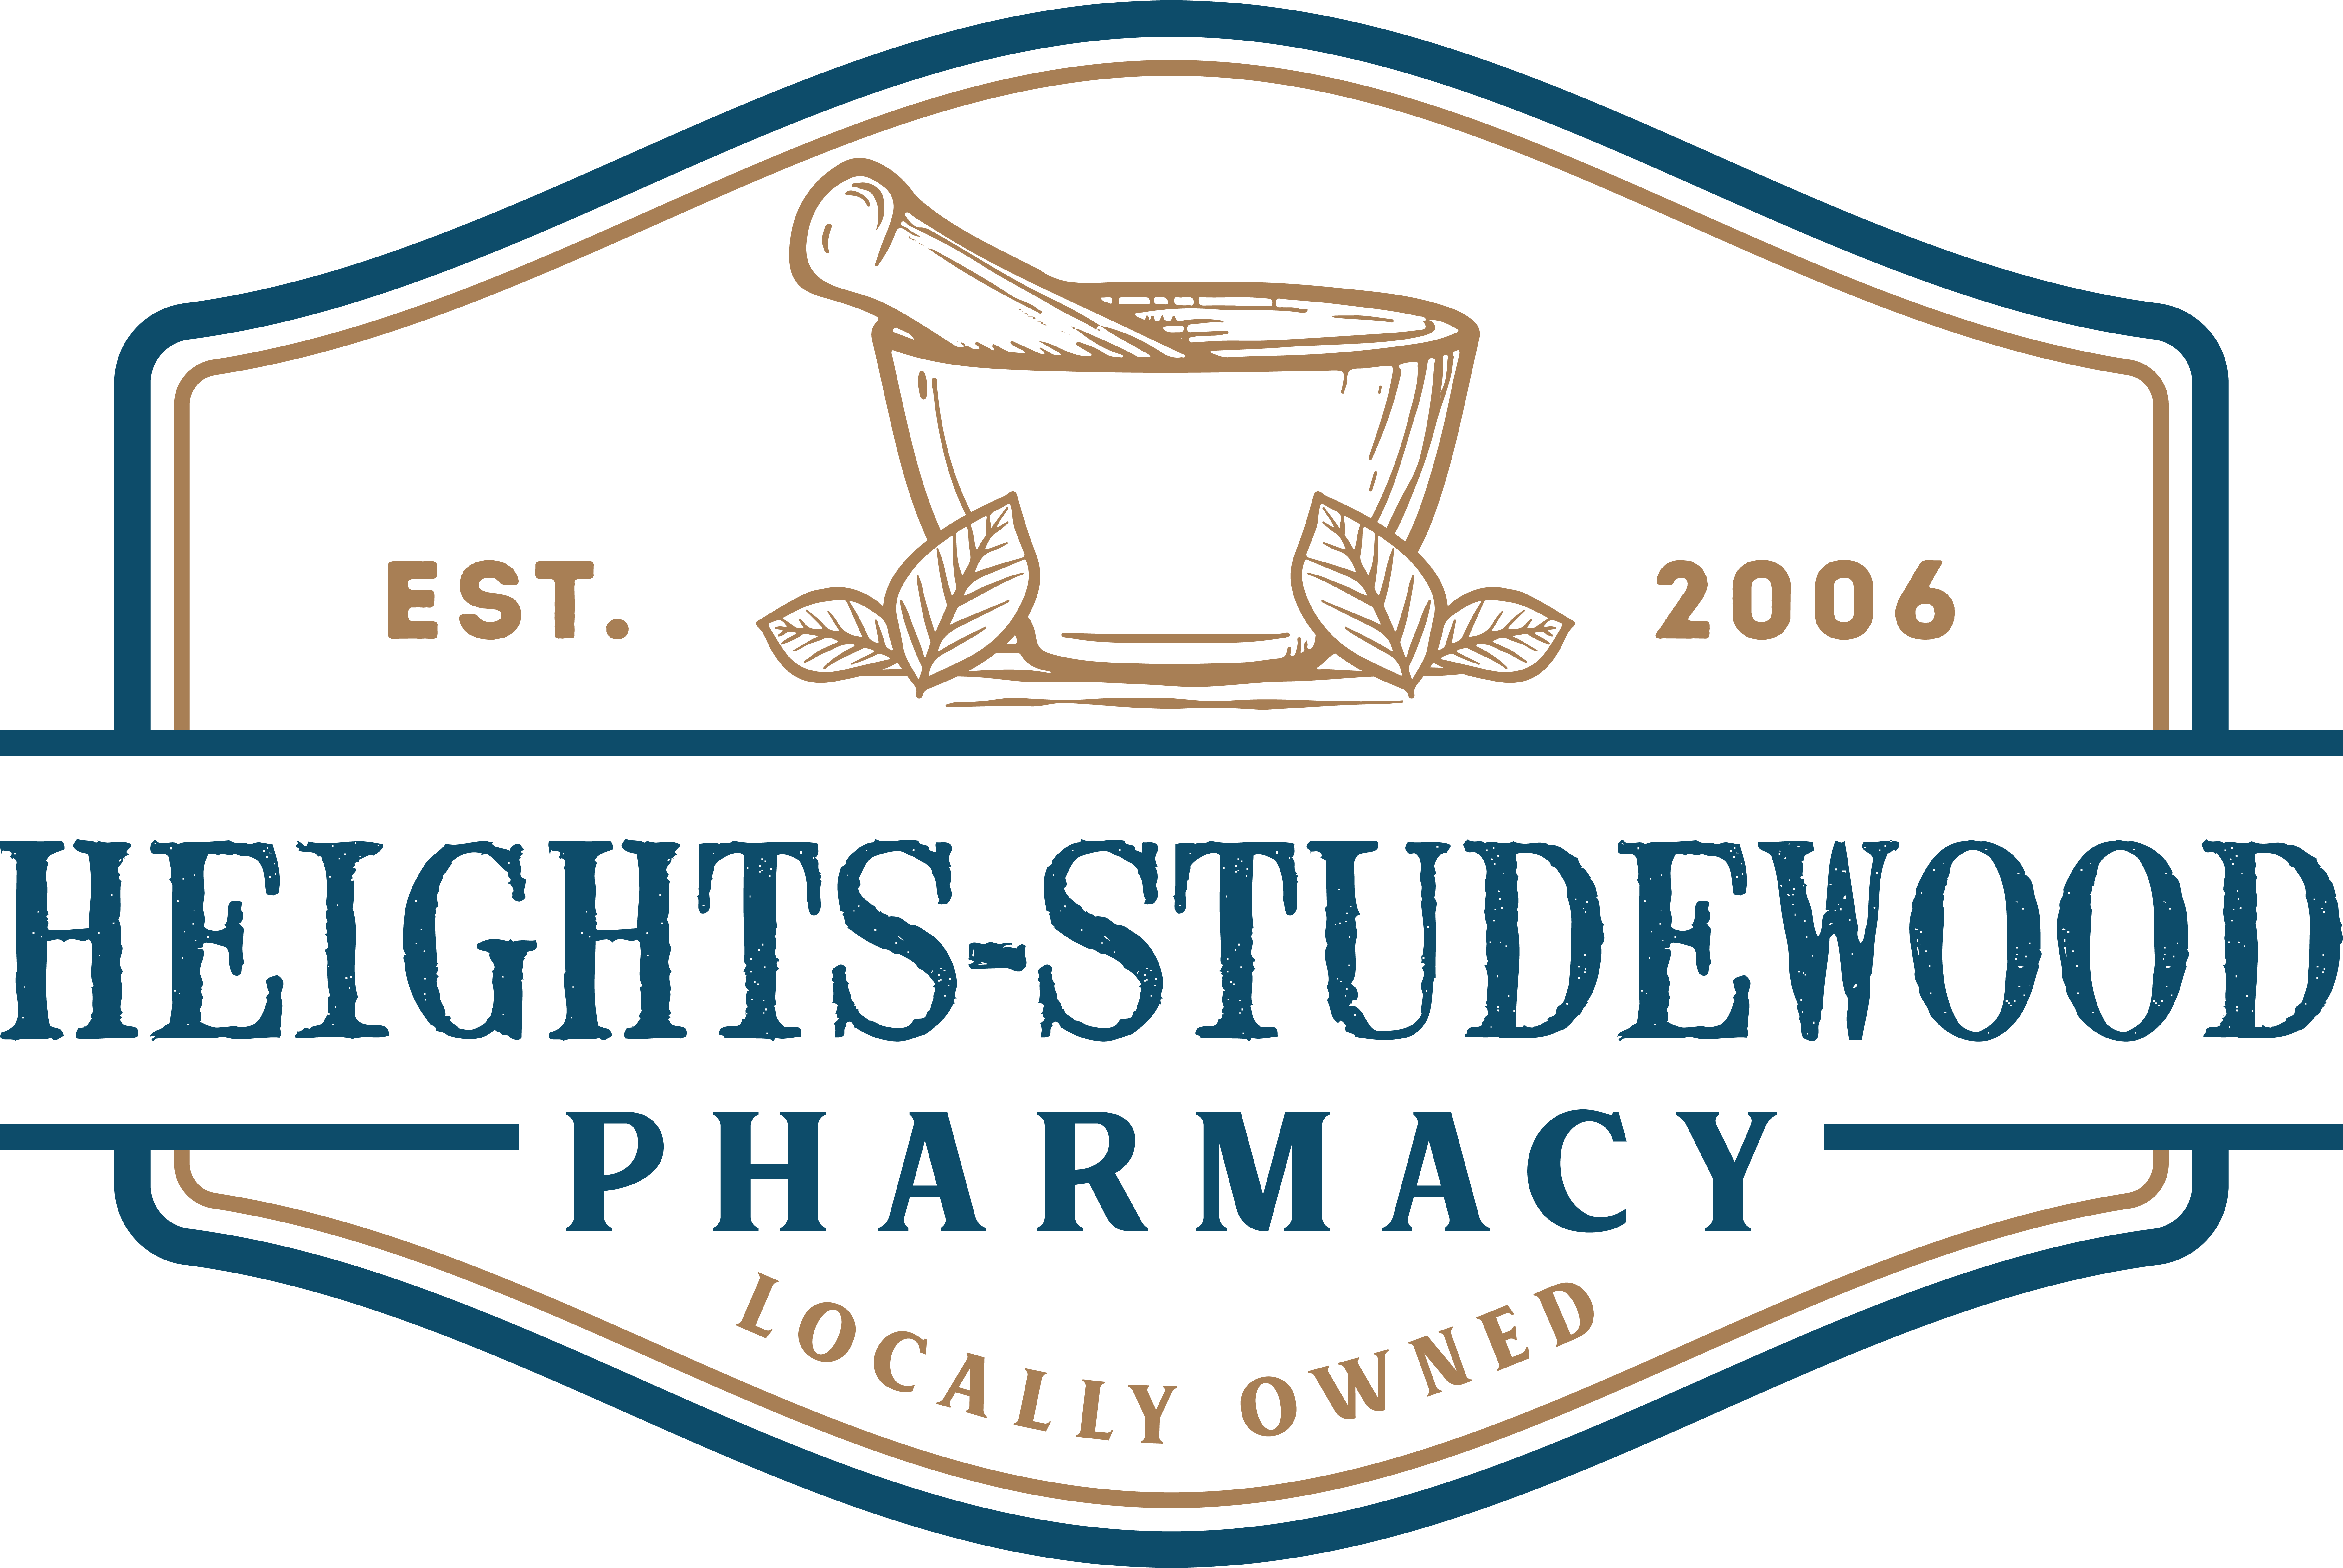 Heights-Studewood Pharmacy